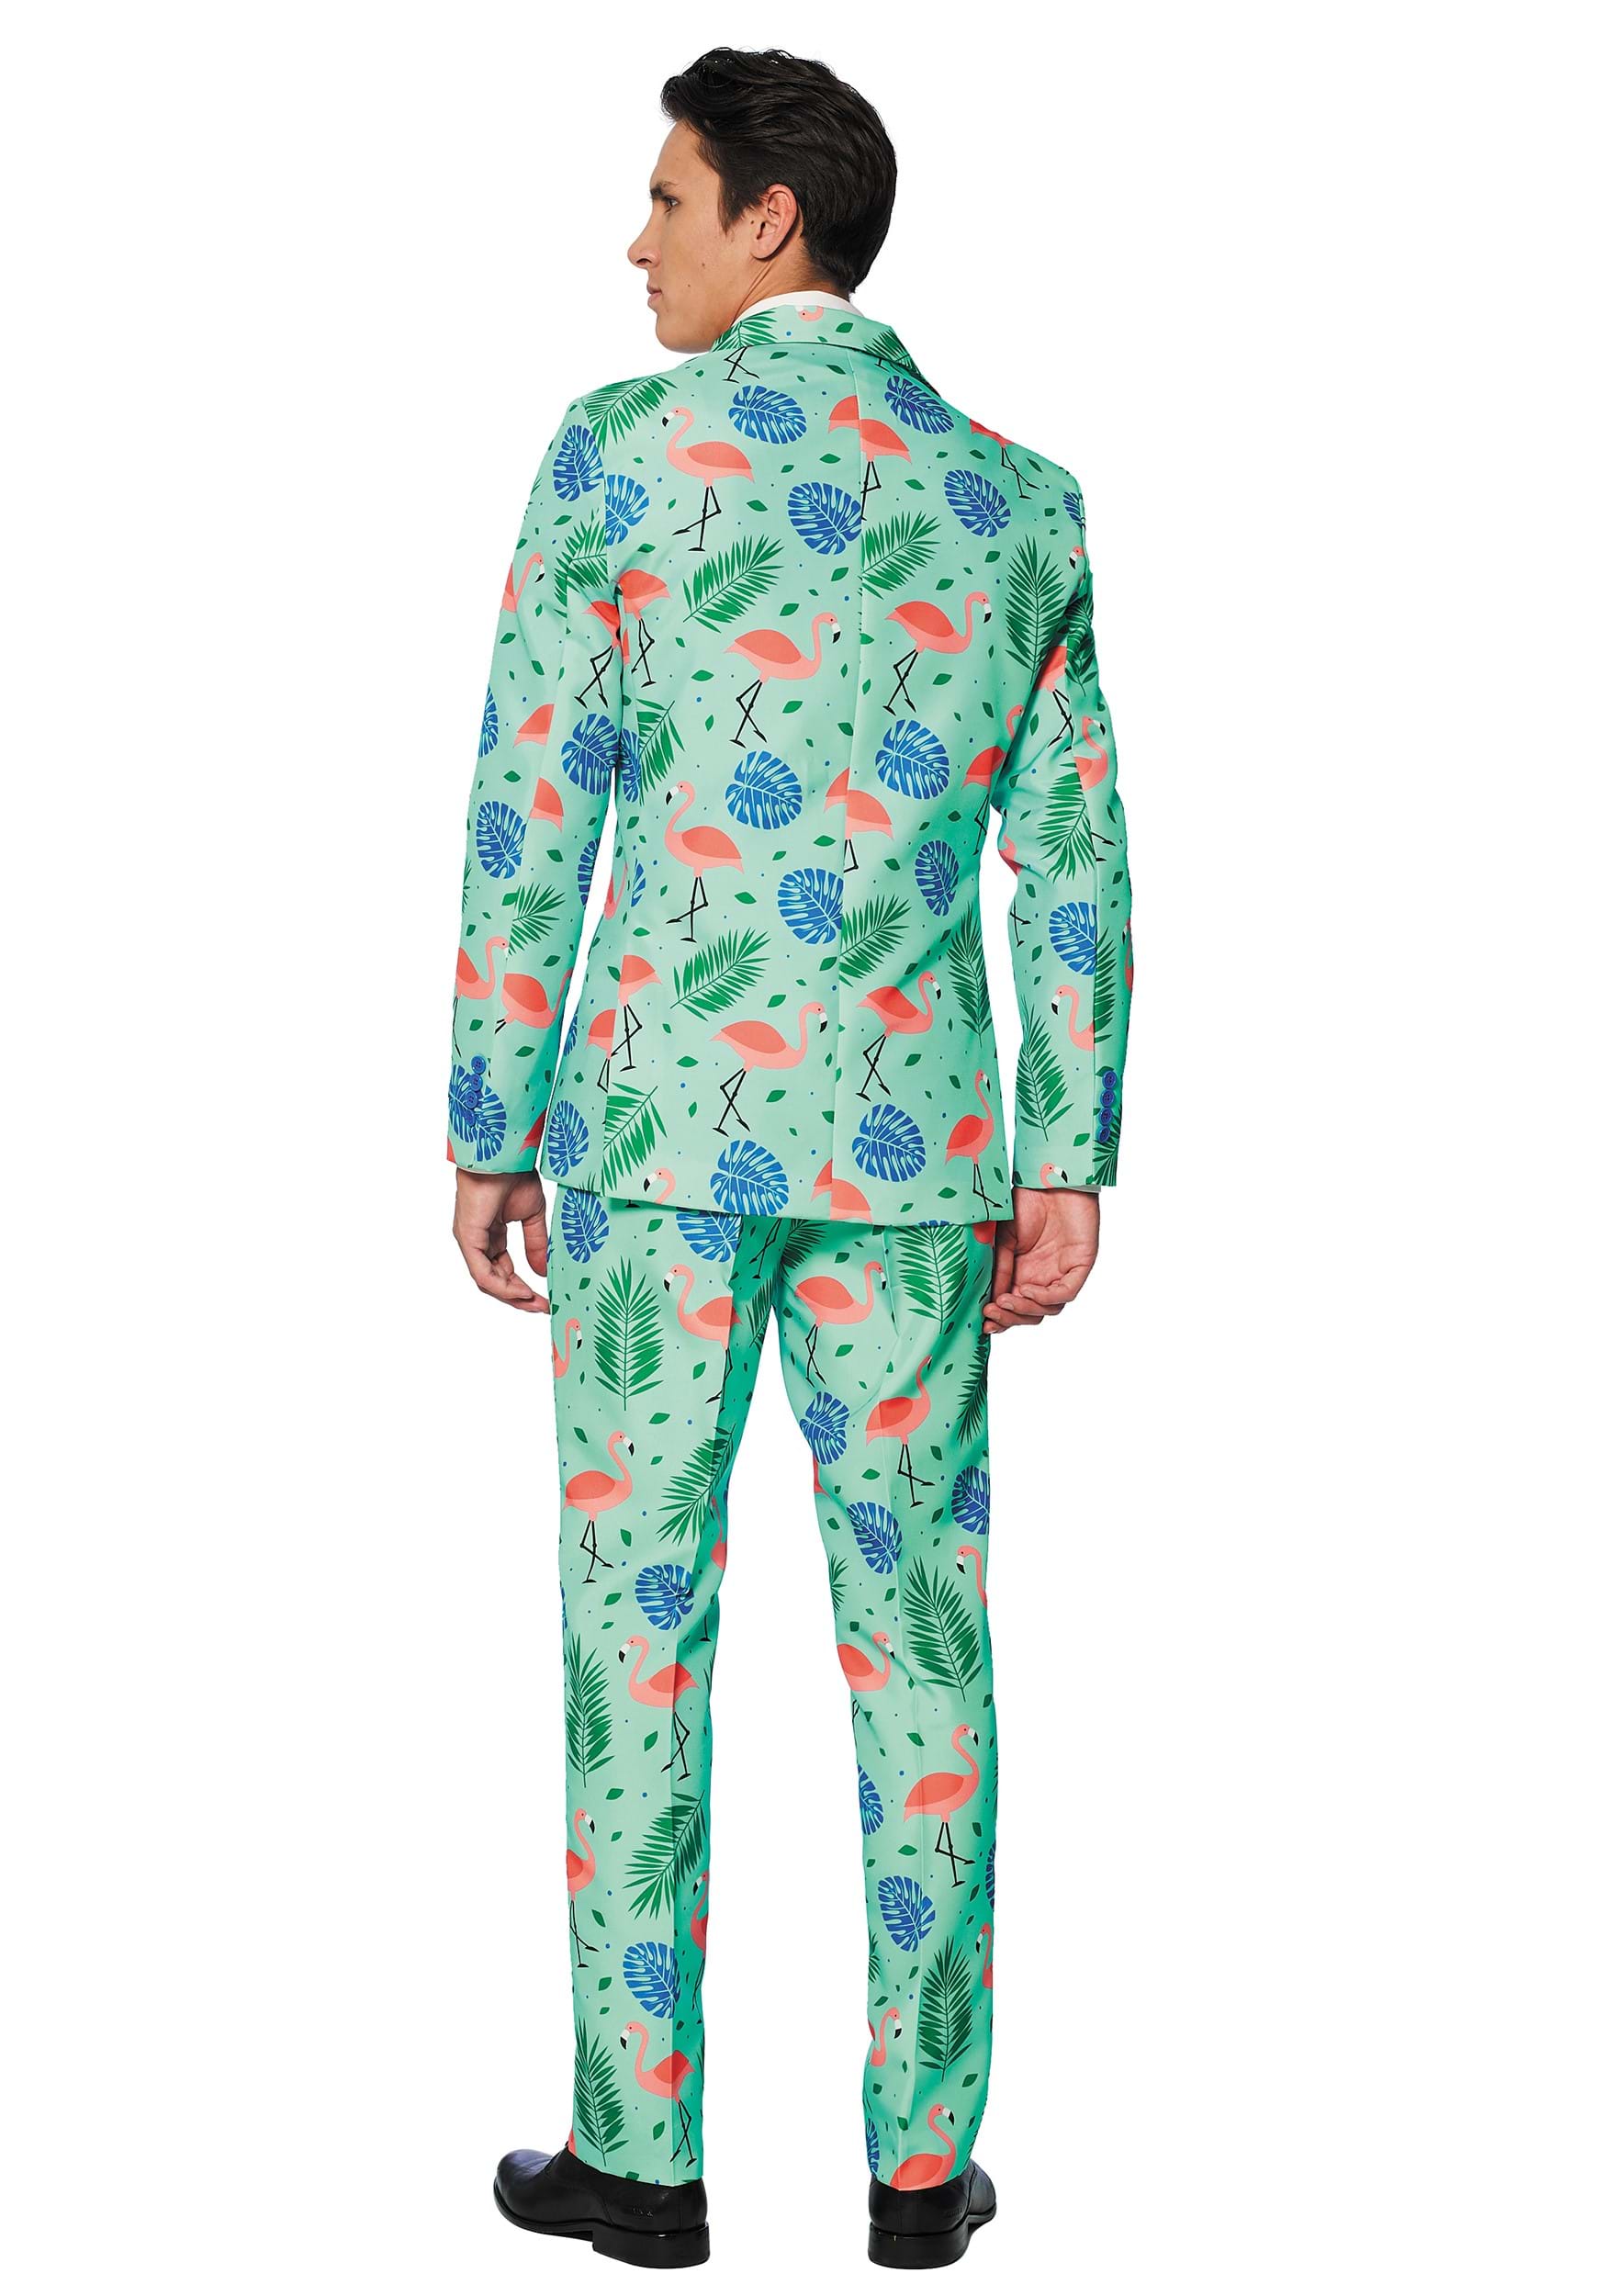 Men's Suitmeister Tropical Suit Costume